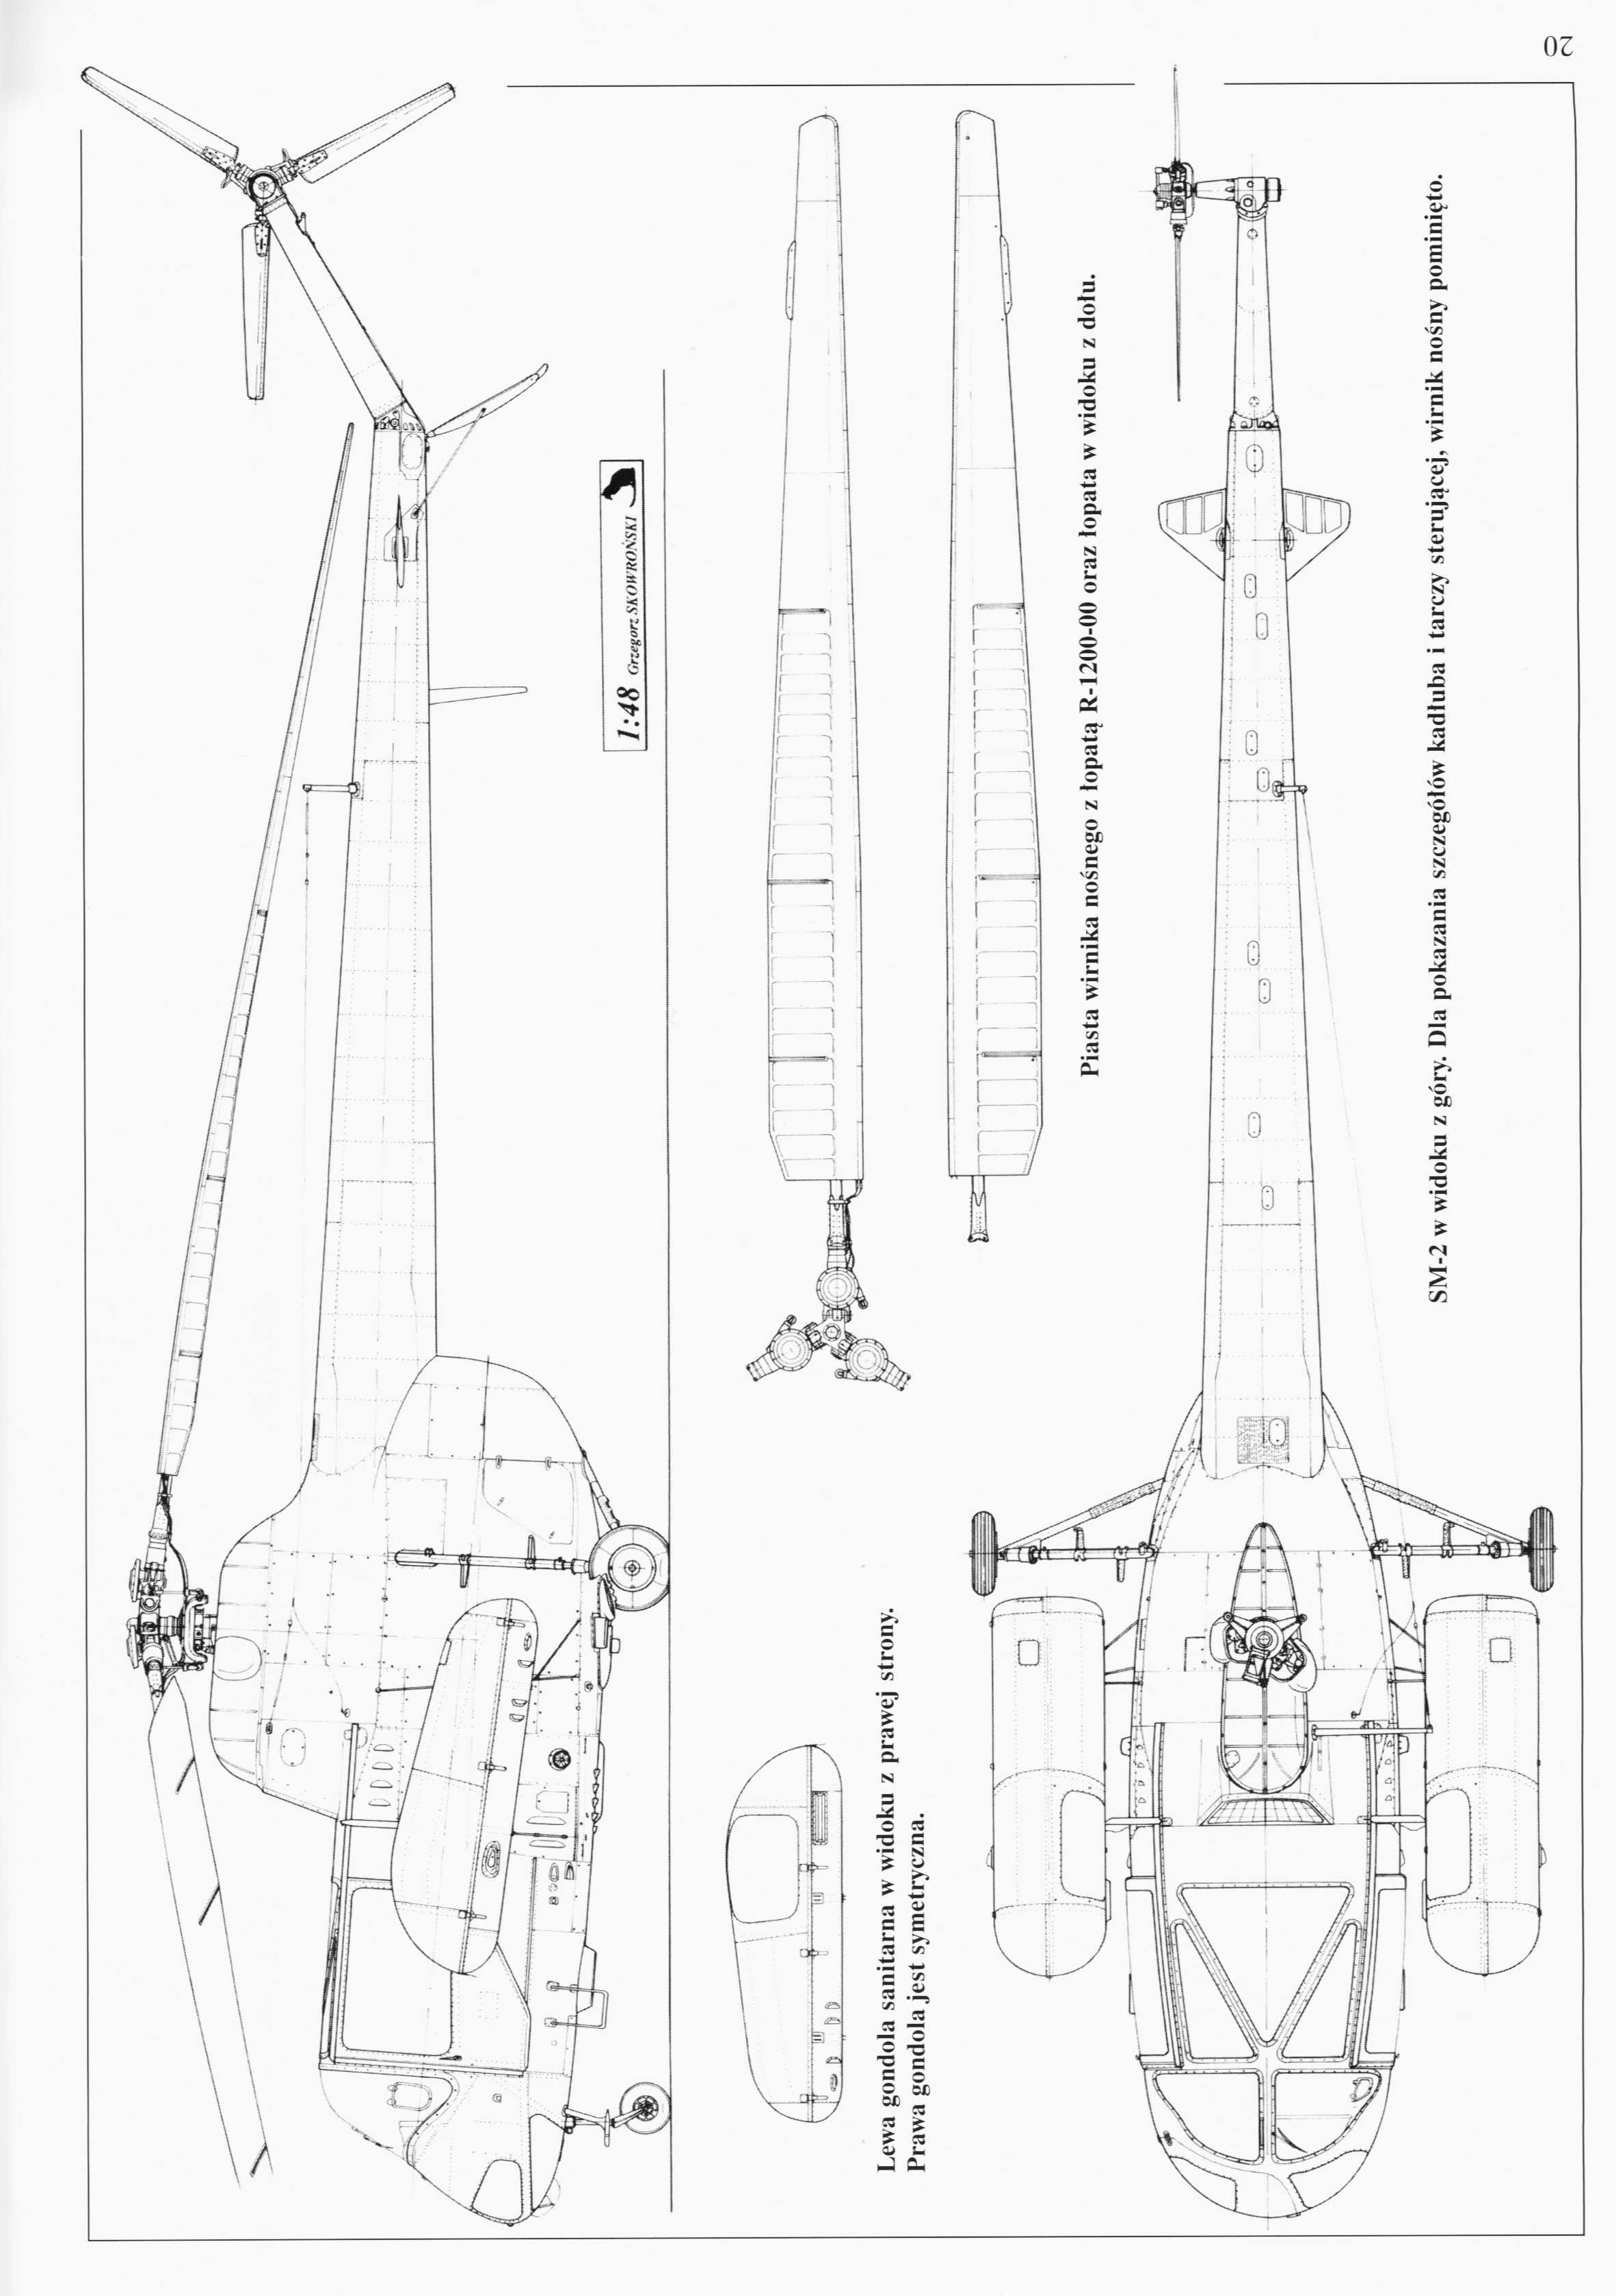 PZL SM-2 blueprint